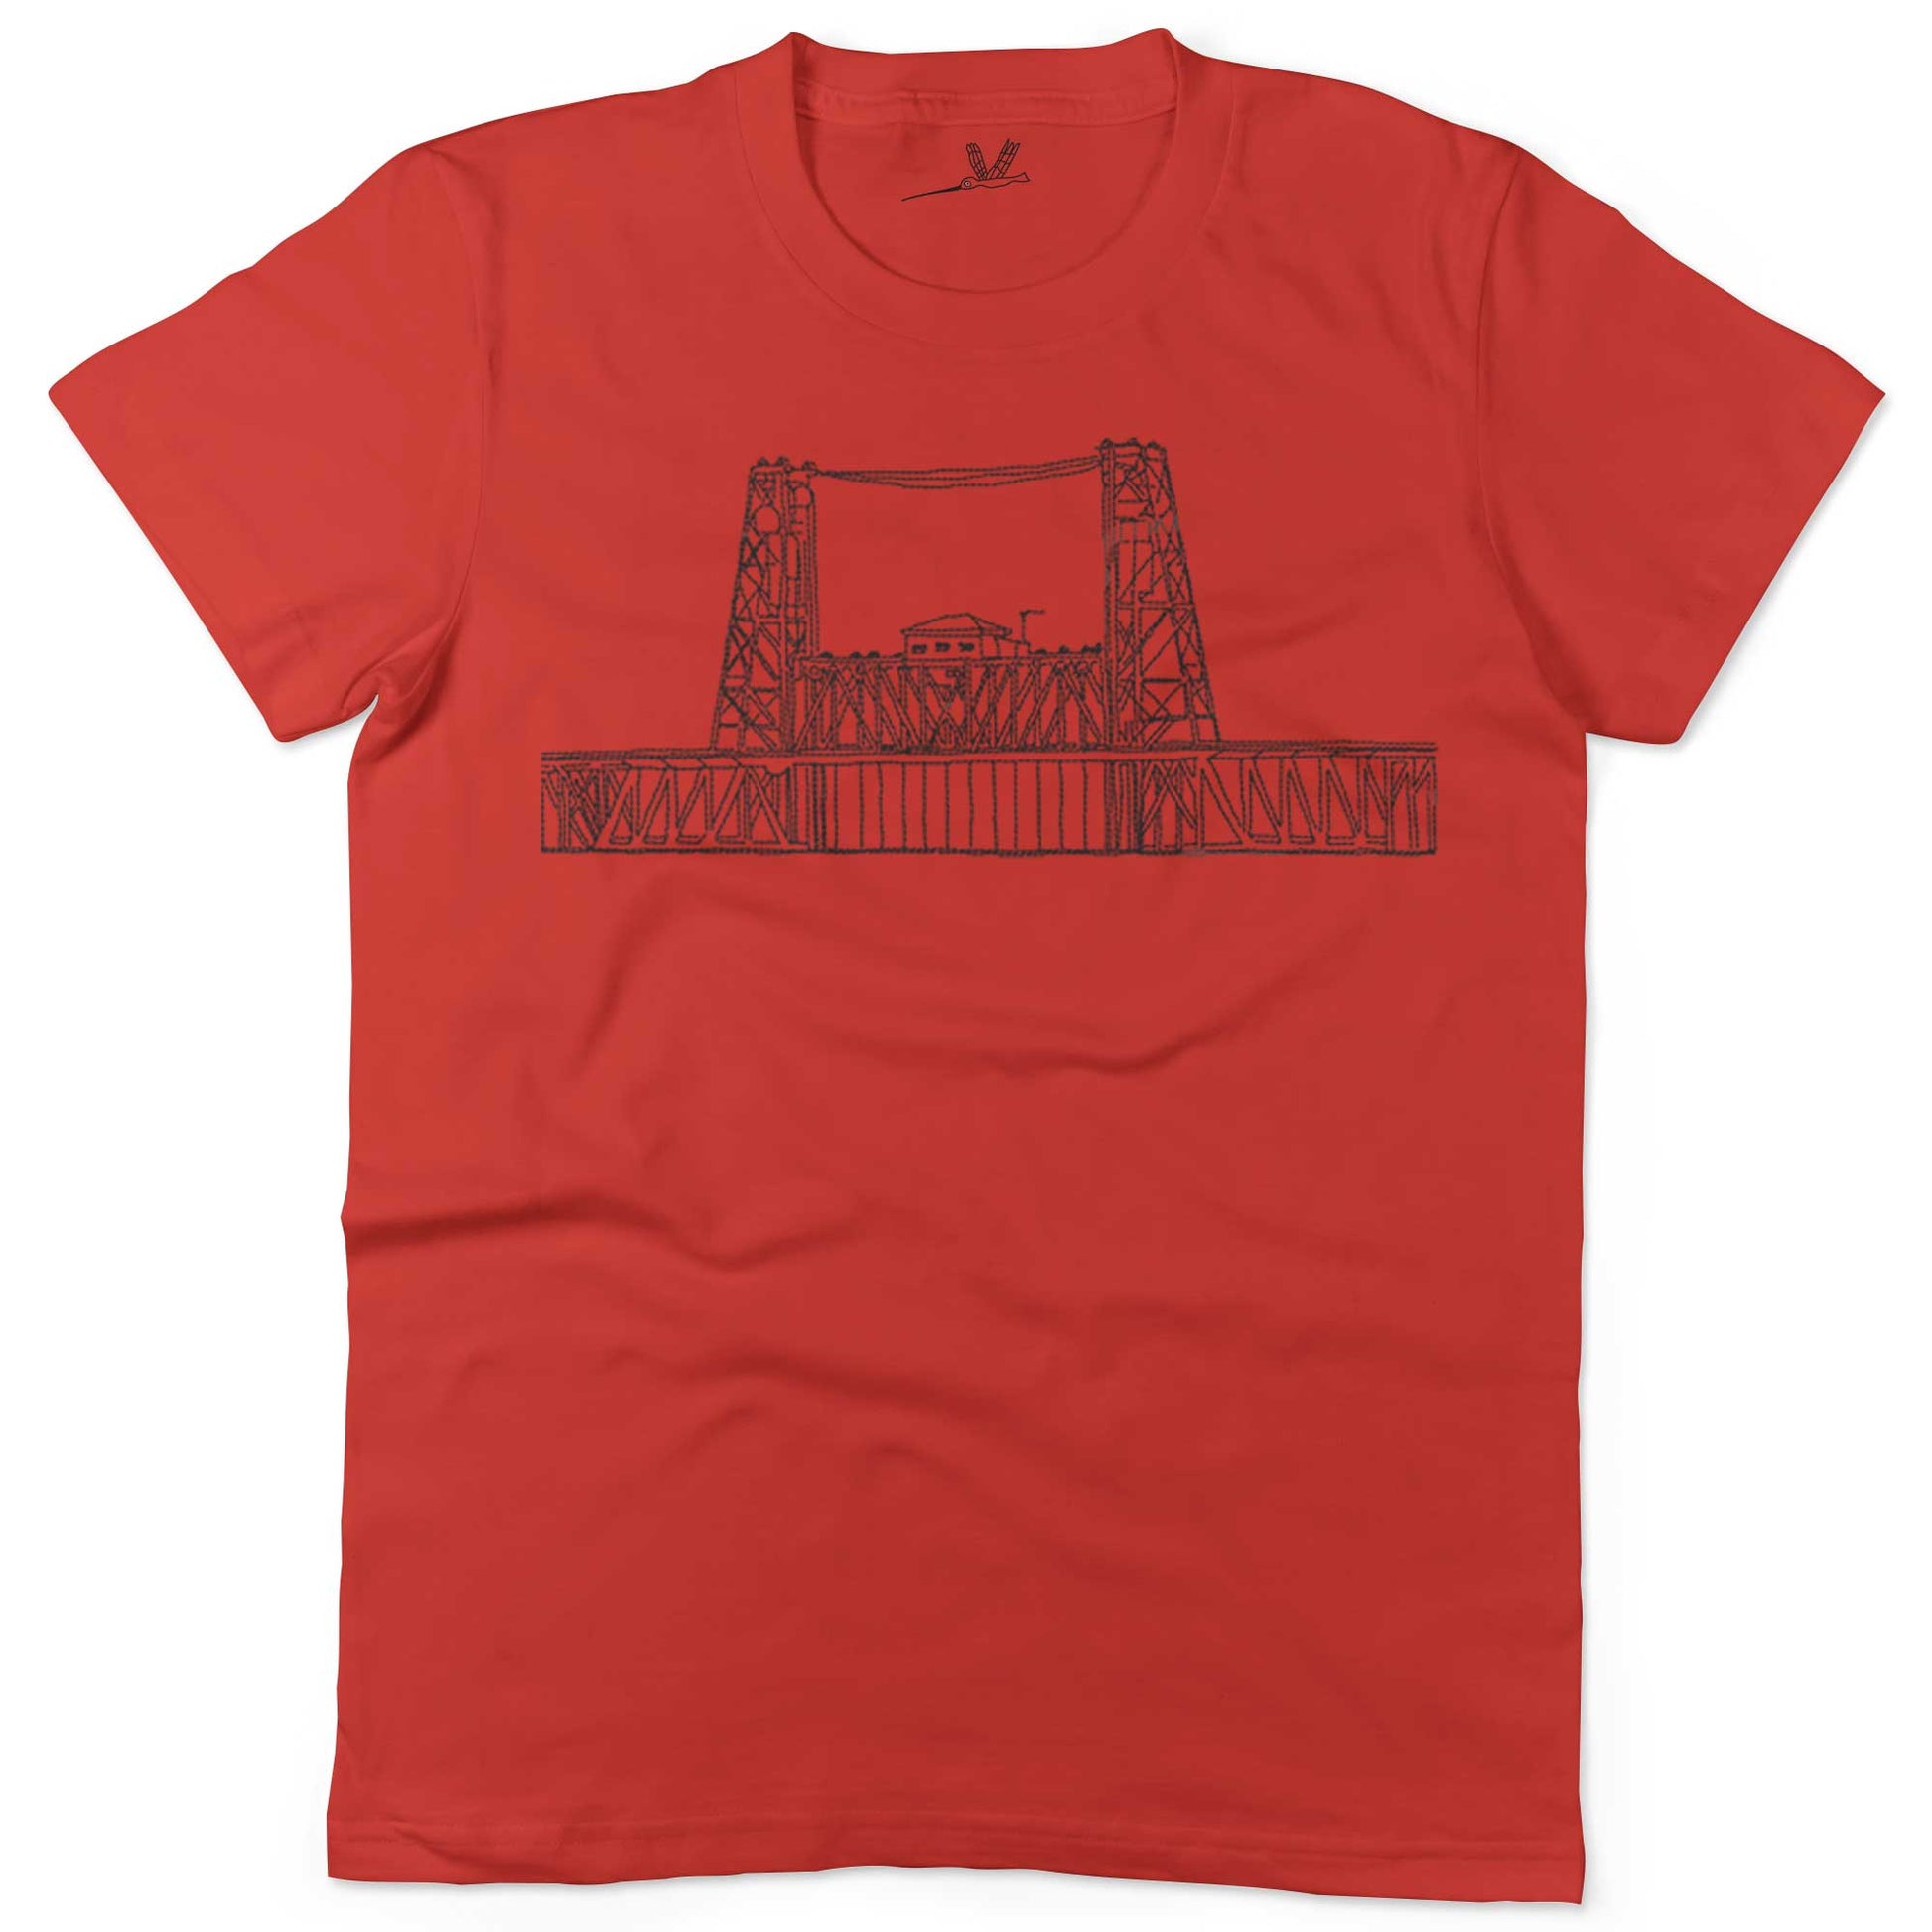 Steel Bridge Unisex Or Women's Cotton T-shirt-Red-Woman